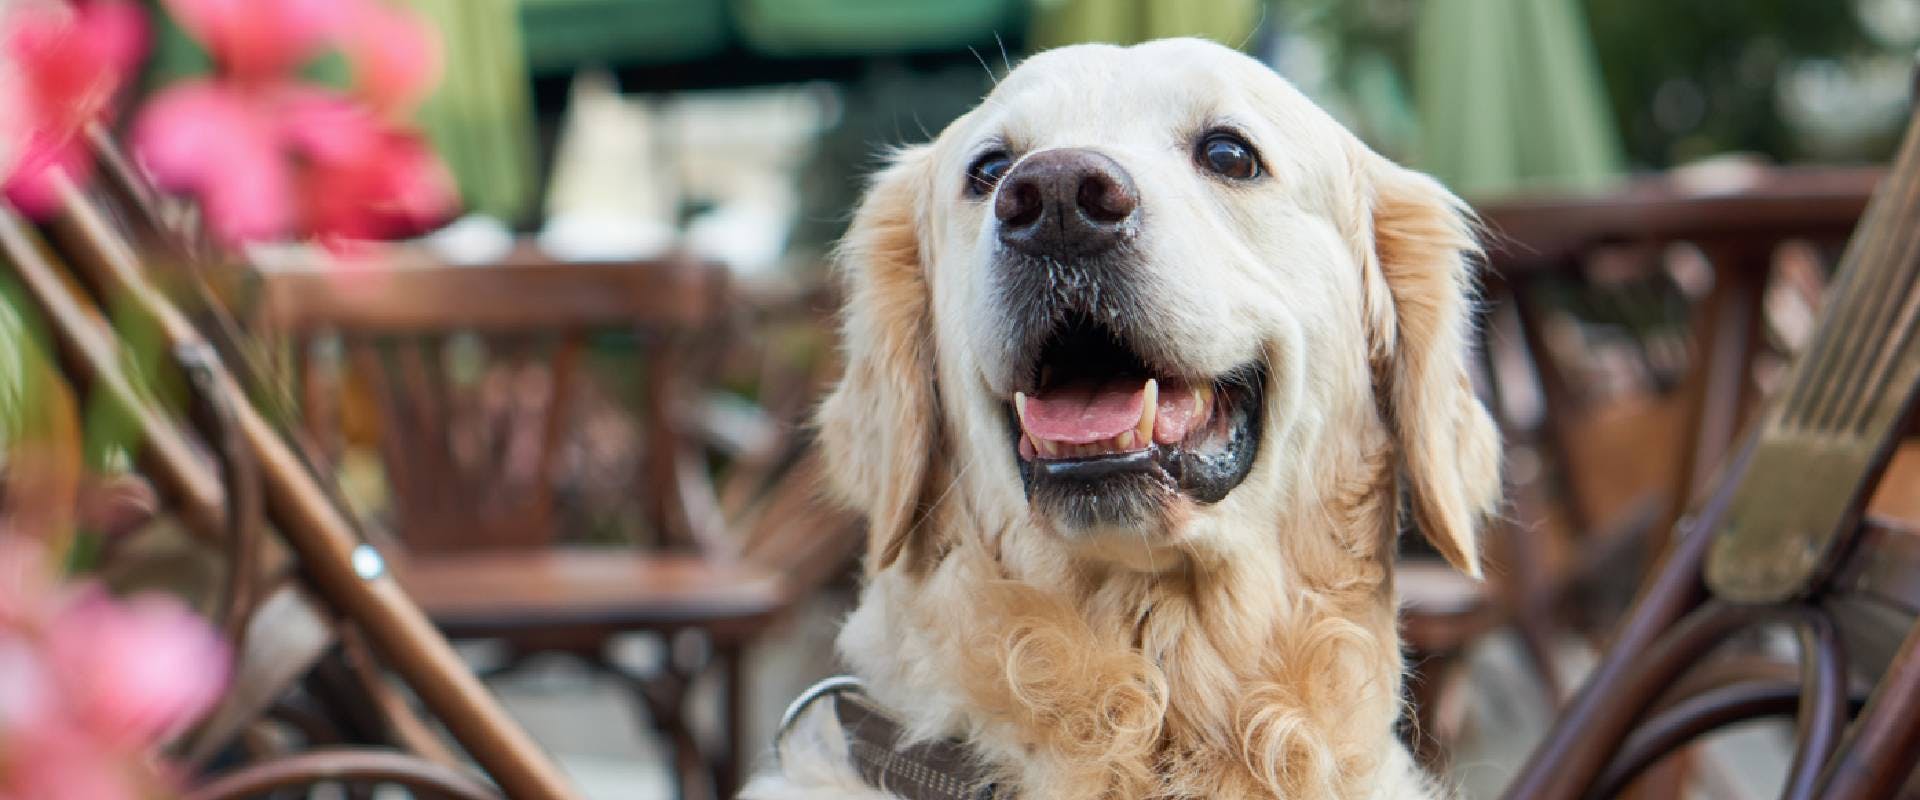 Close-up of a Golden Retriever in a dog-friendly bar